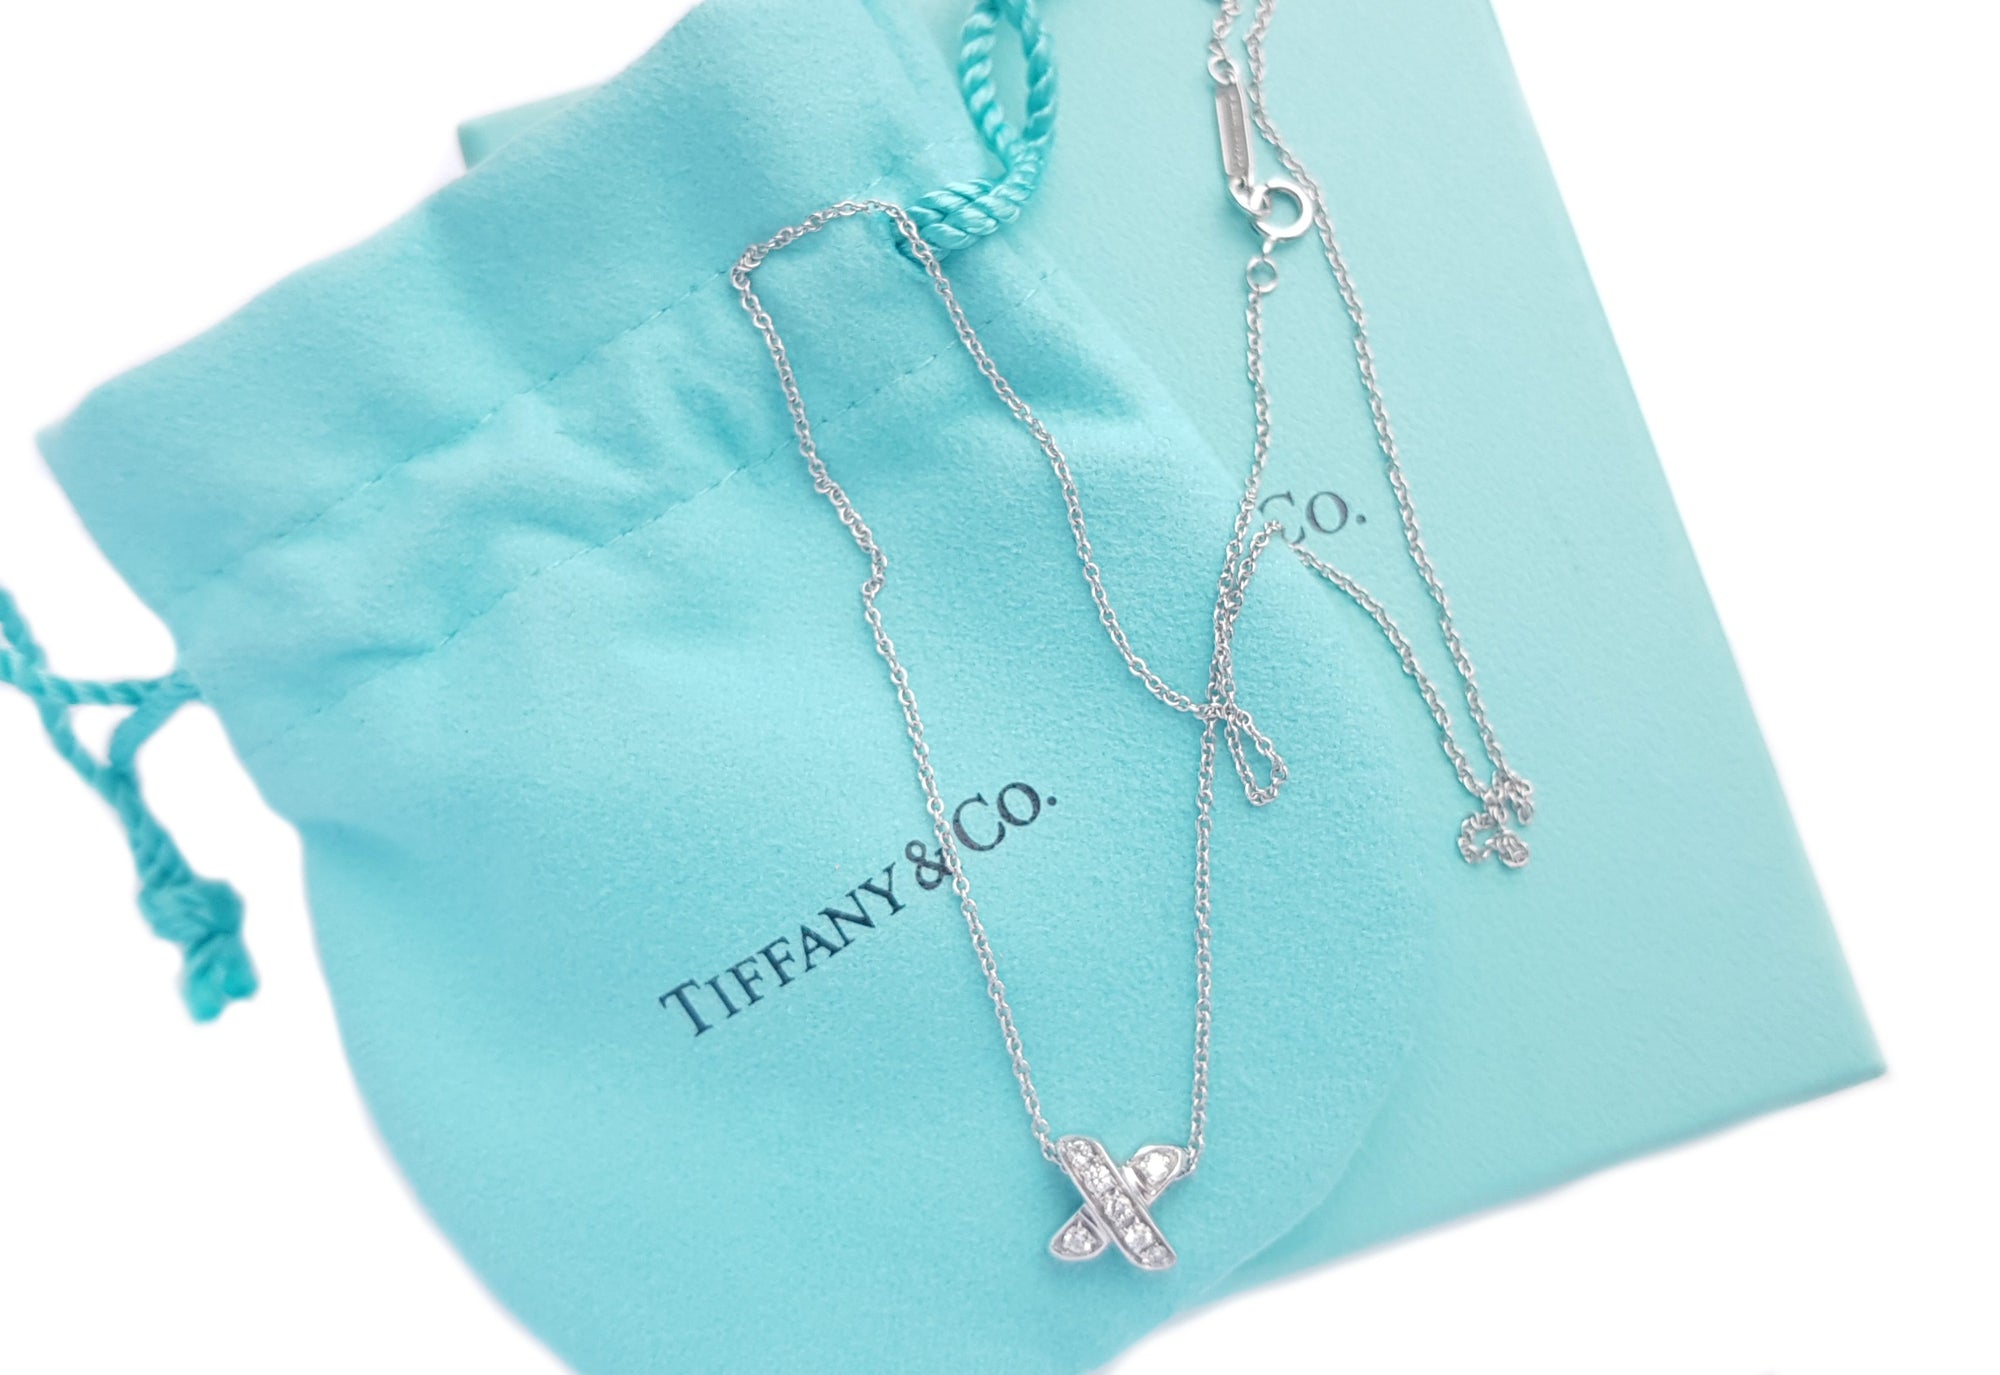 Tiffany & Co. Signature X Diamond Necklace in 18kt White Gold | QD Jewelry